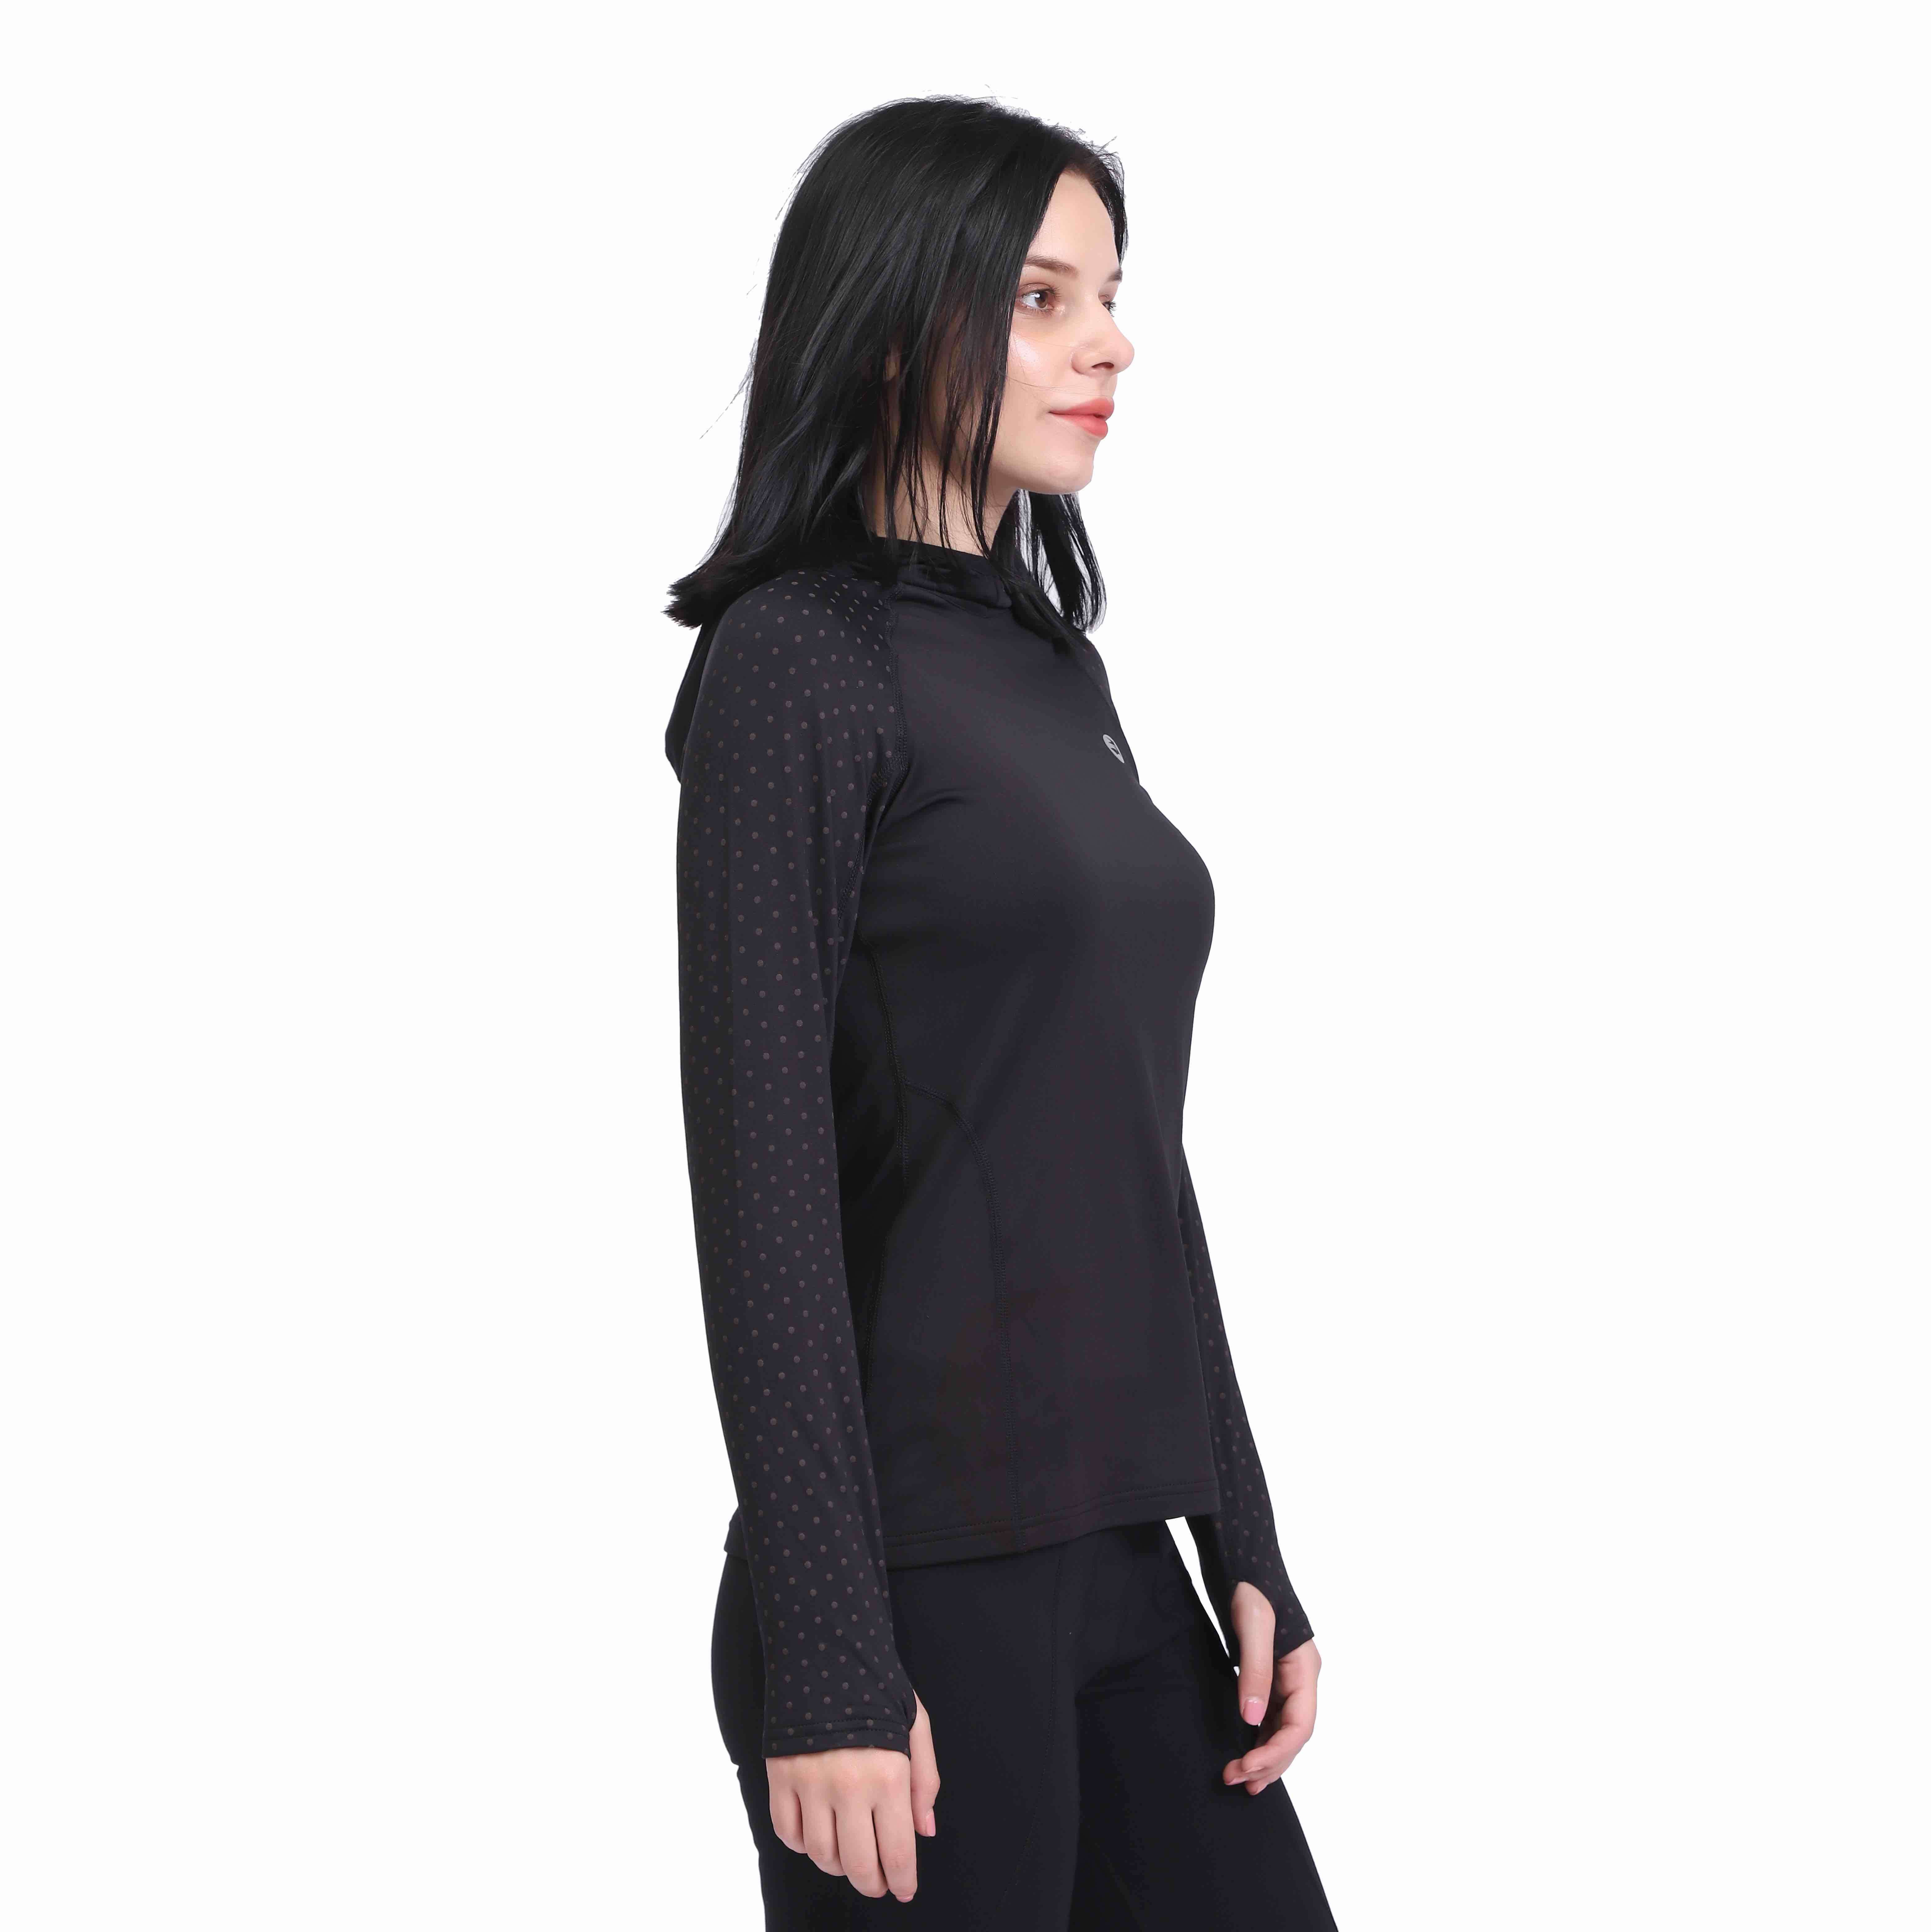 Ropa interior térmica para mujeres con capucha de manga larga forrada 